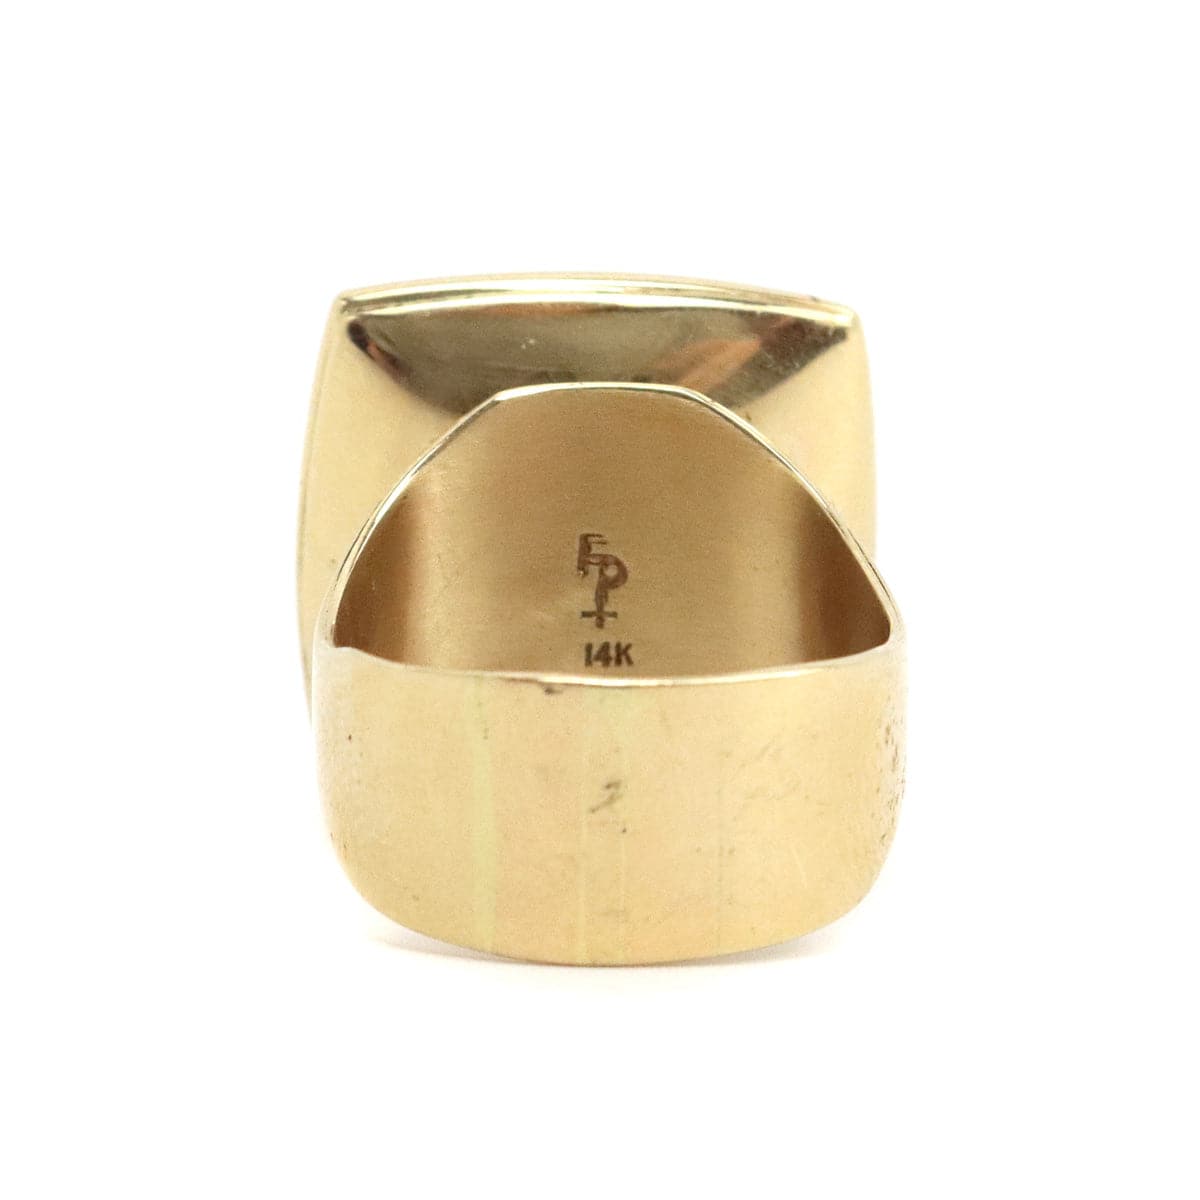 Frank Frank Jr. - 14K Gold Repousse Ring, size 10.75 (J91699-0123-007) 3